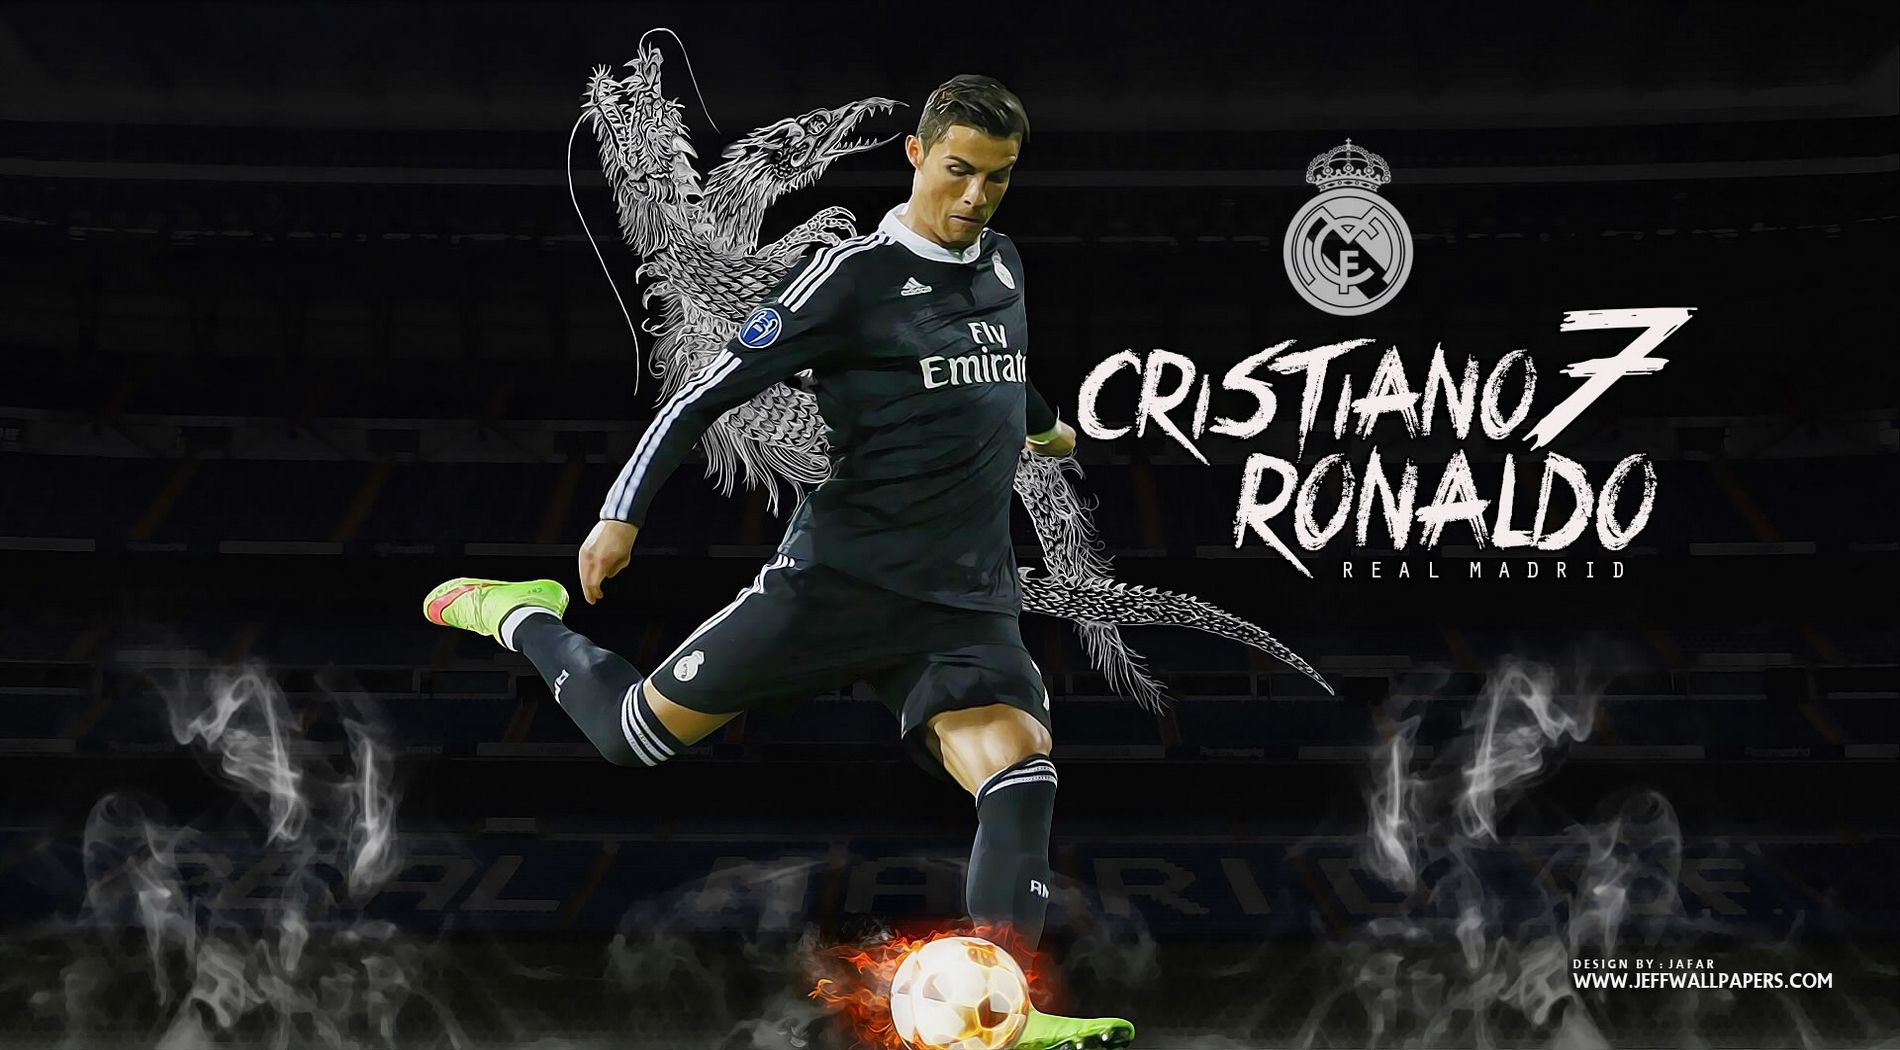 Ronaldo Real Madrid Wallpaper HD. Real madrid wallpaper, Cristiano ronaldo wallpaper, Ronaldo real